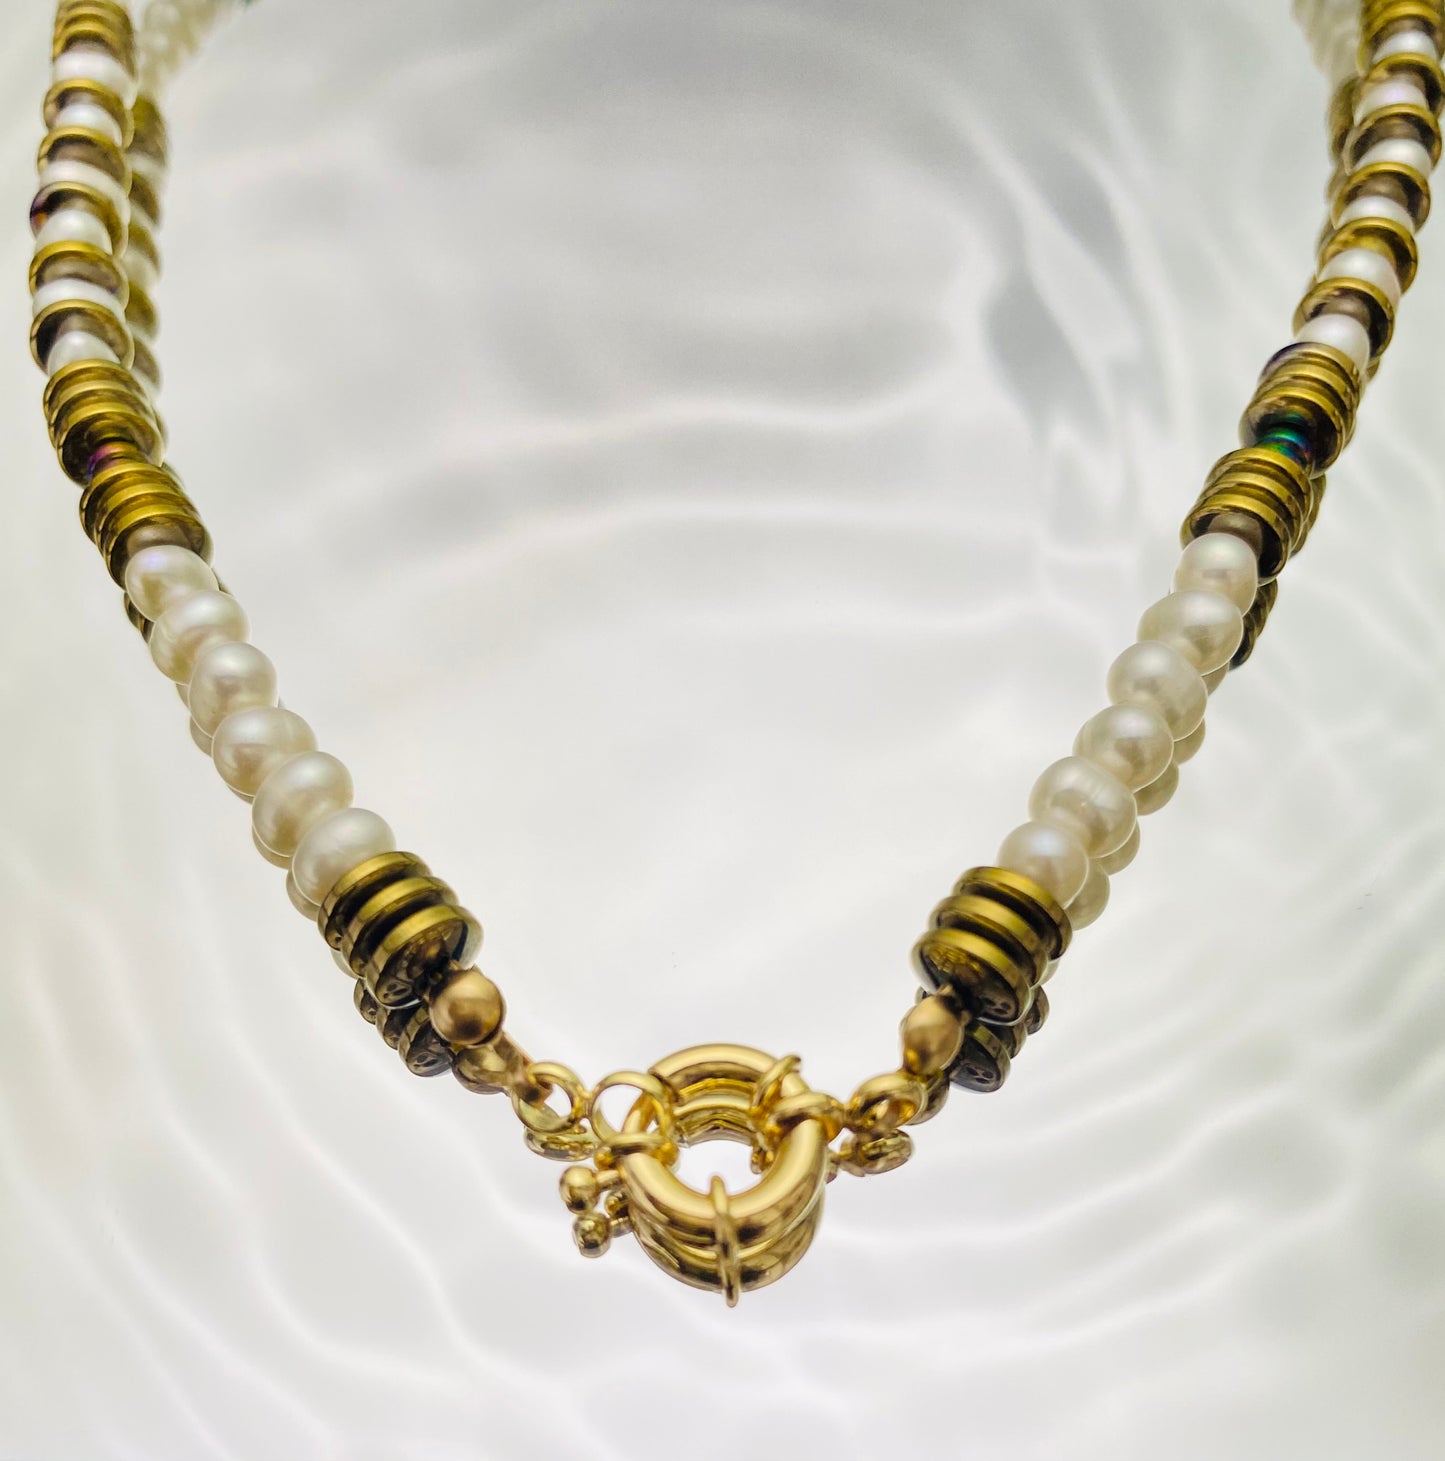 Divine “Ocean” necklace